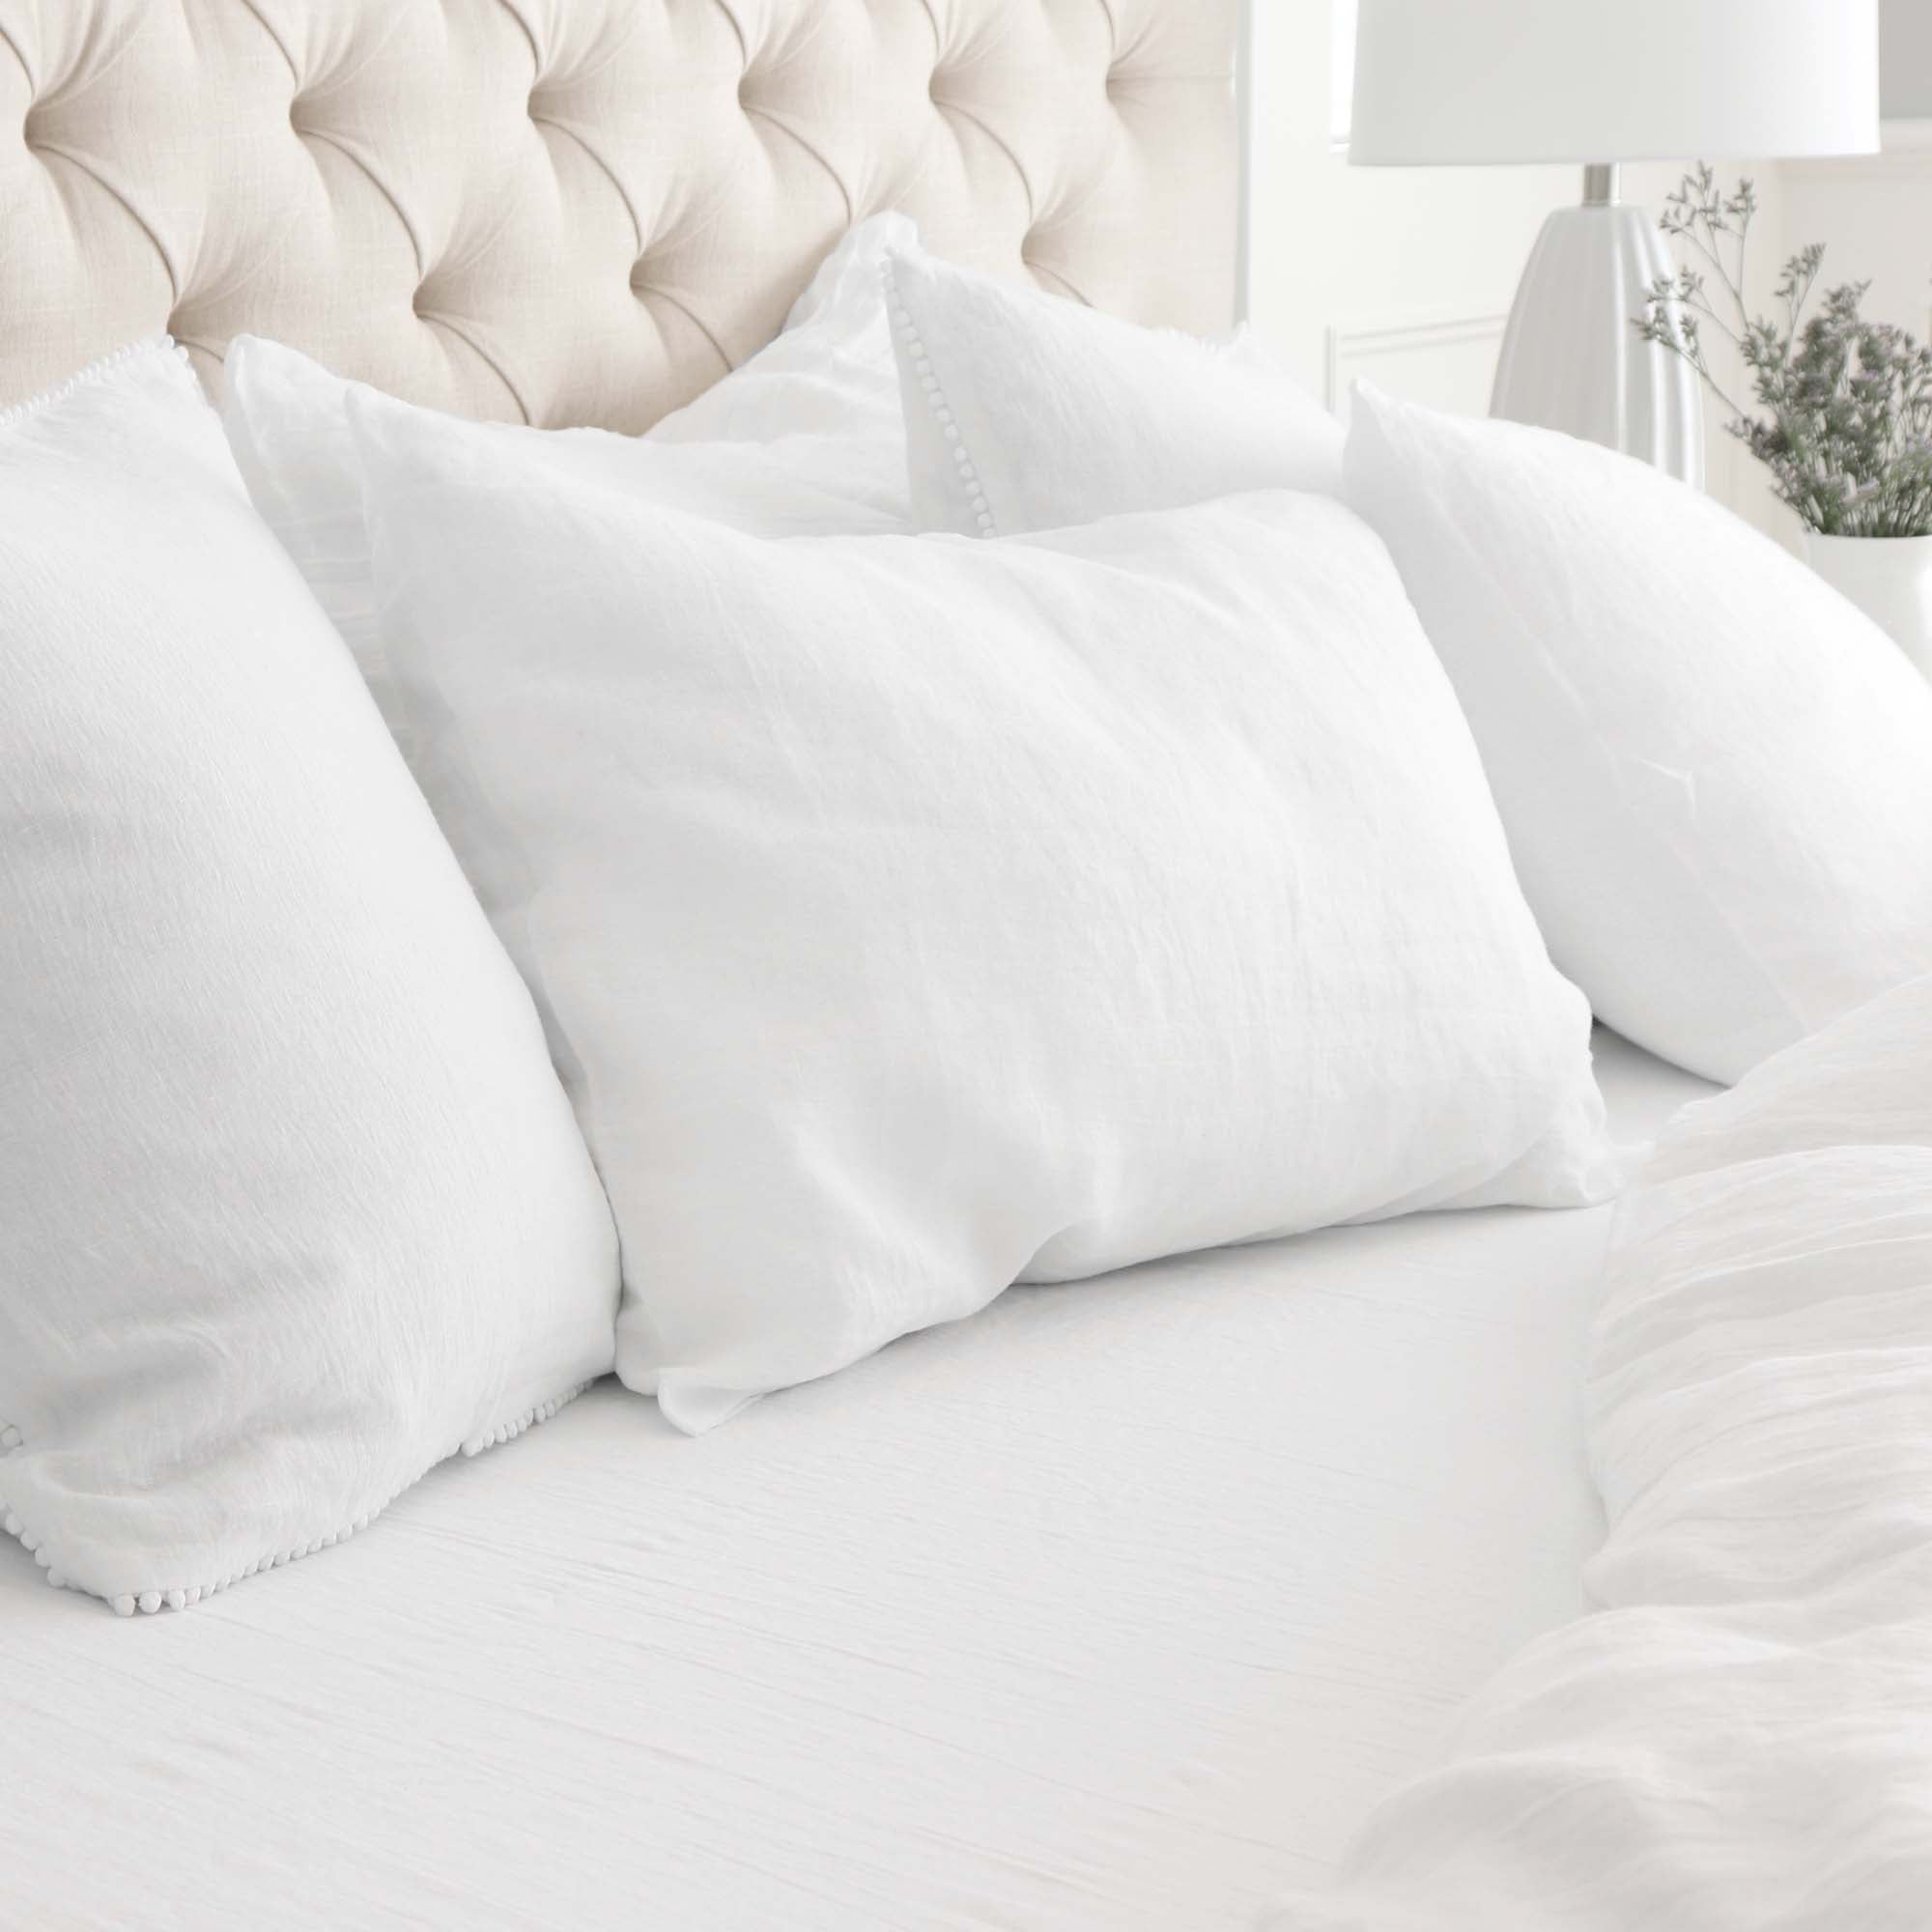 European White Linen OEKO-TEX Fitted Sheet with Pillowcases  Edit alt text